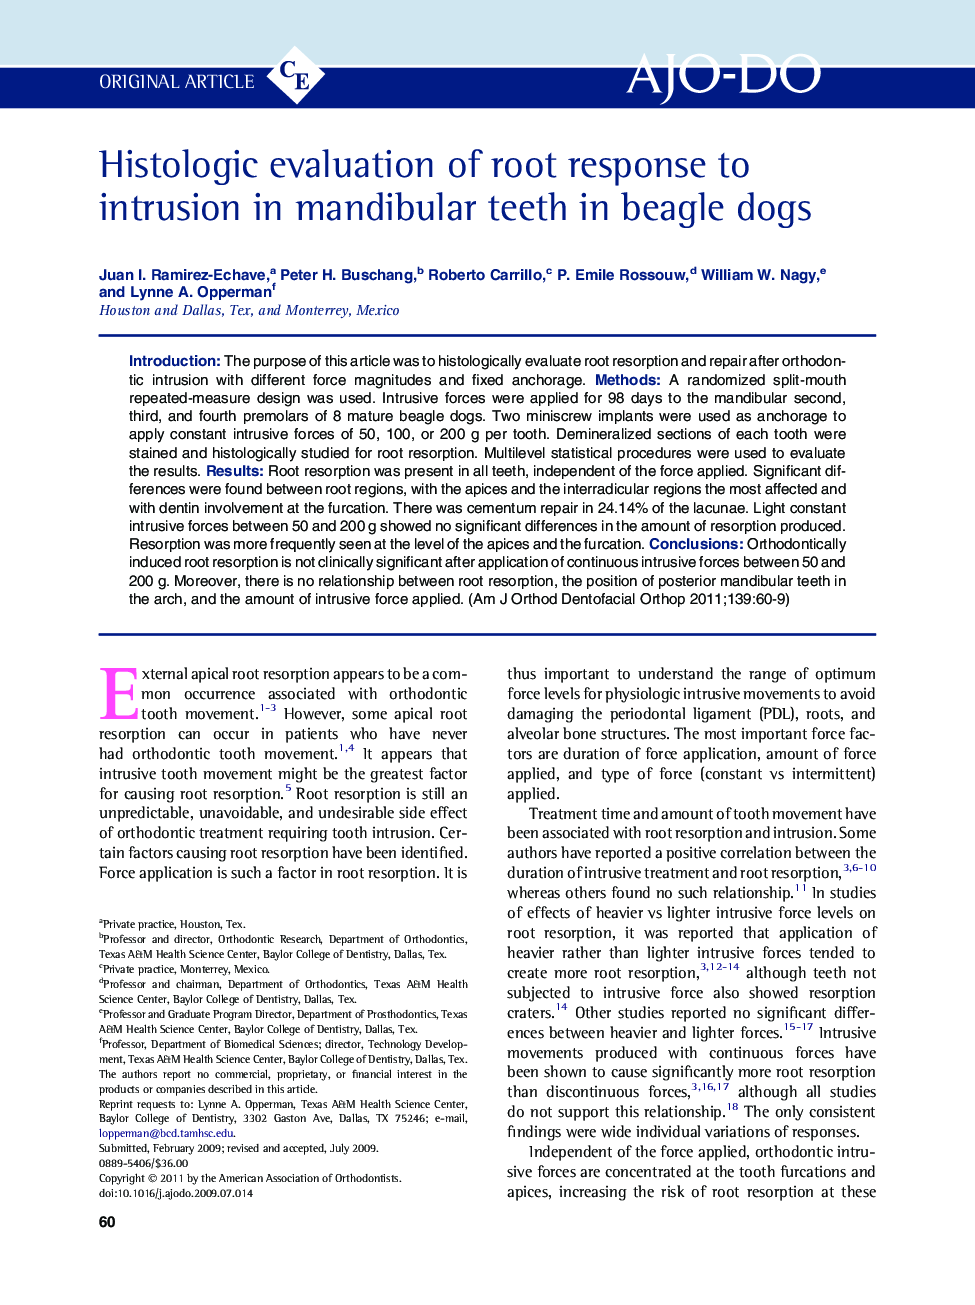 Histologic evaluation of root response to intrusion in mandibular teeth in beagle dogs 